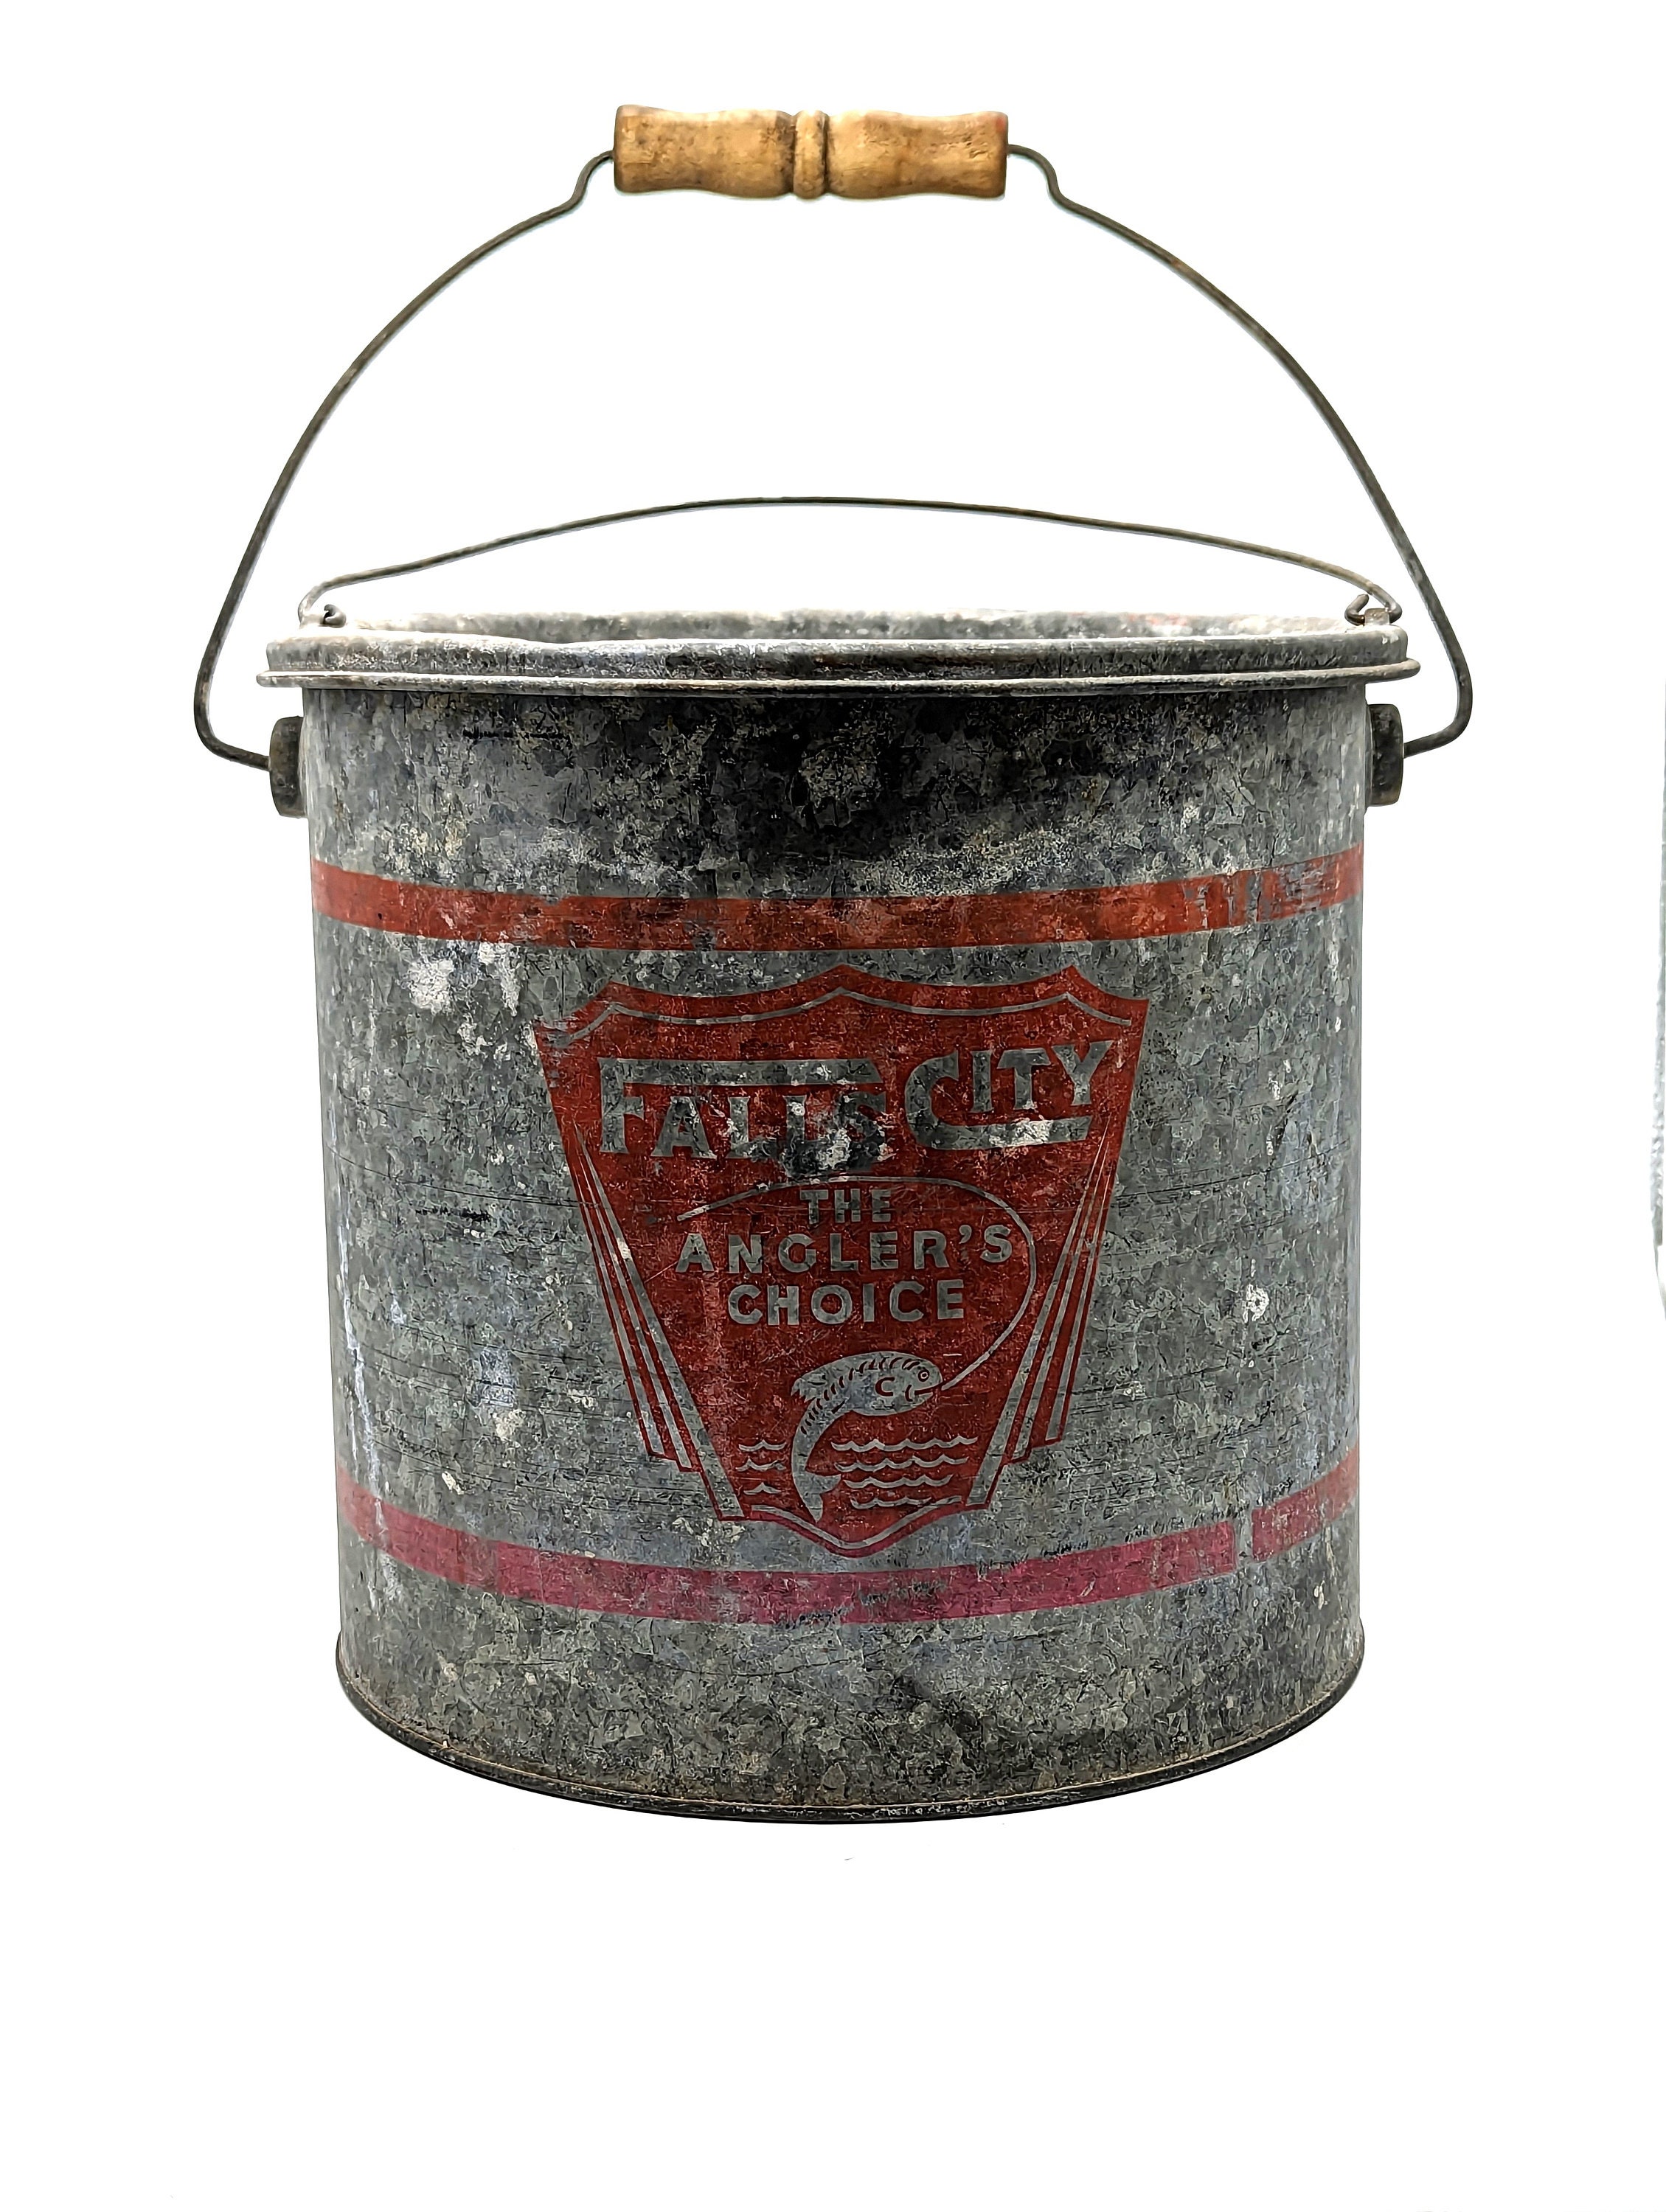 Vintage Frabills Fully Floating Min-O-Life Minnow Bucket GALVANIZED Metal  Minnow Pail, Fishing Gear, Bass, Trout Fishing Decor